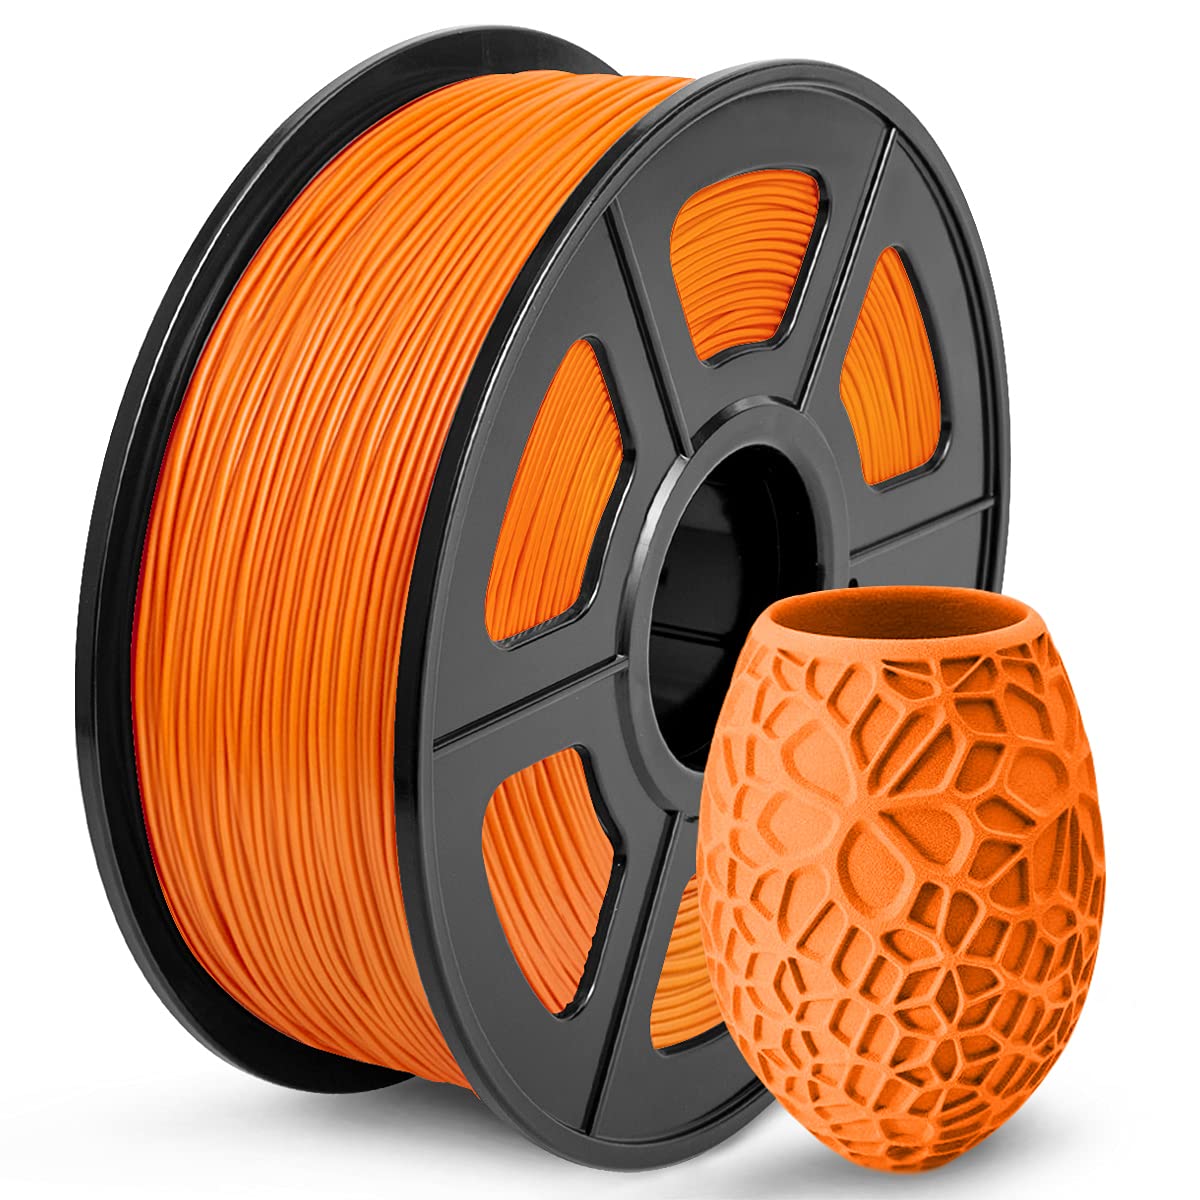 COLOR NARANJA SUNLU PLA filamento para impresora 3D, 1,75 PLA, precisión dimensional +/- 0.001 in, bobina de 2.2 lb 0.069 in